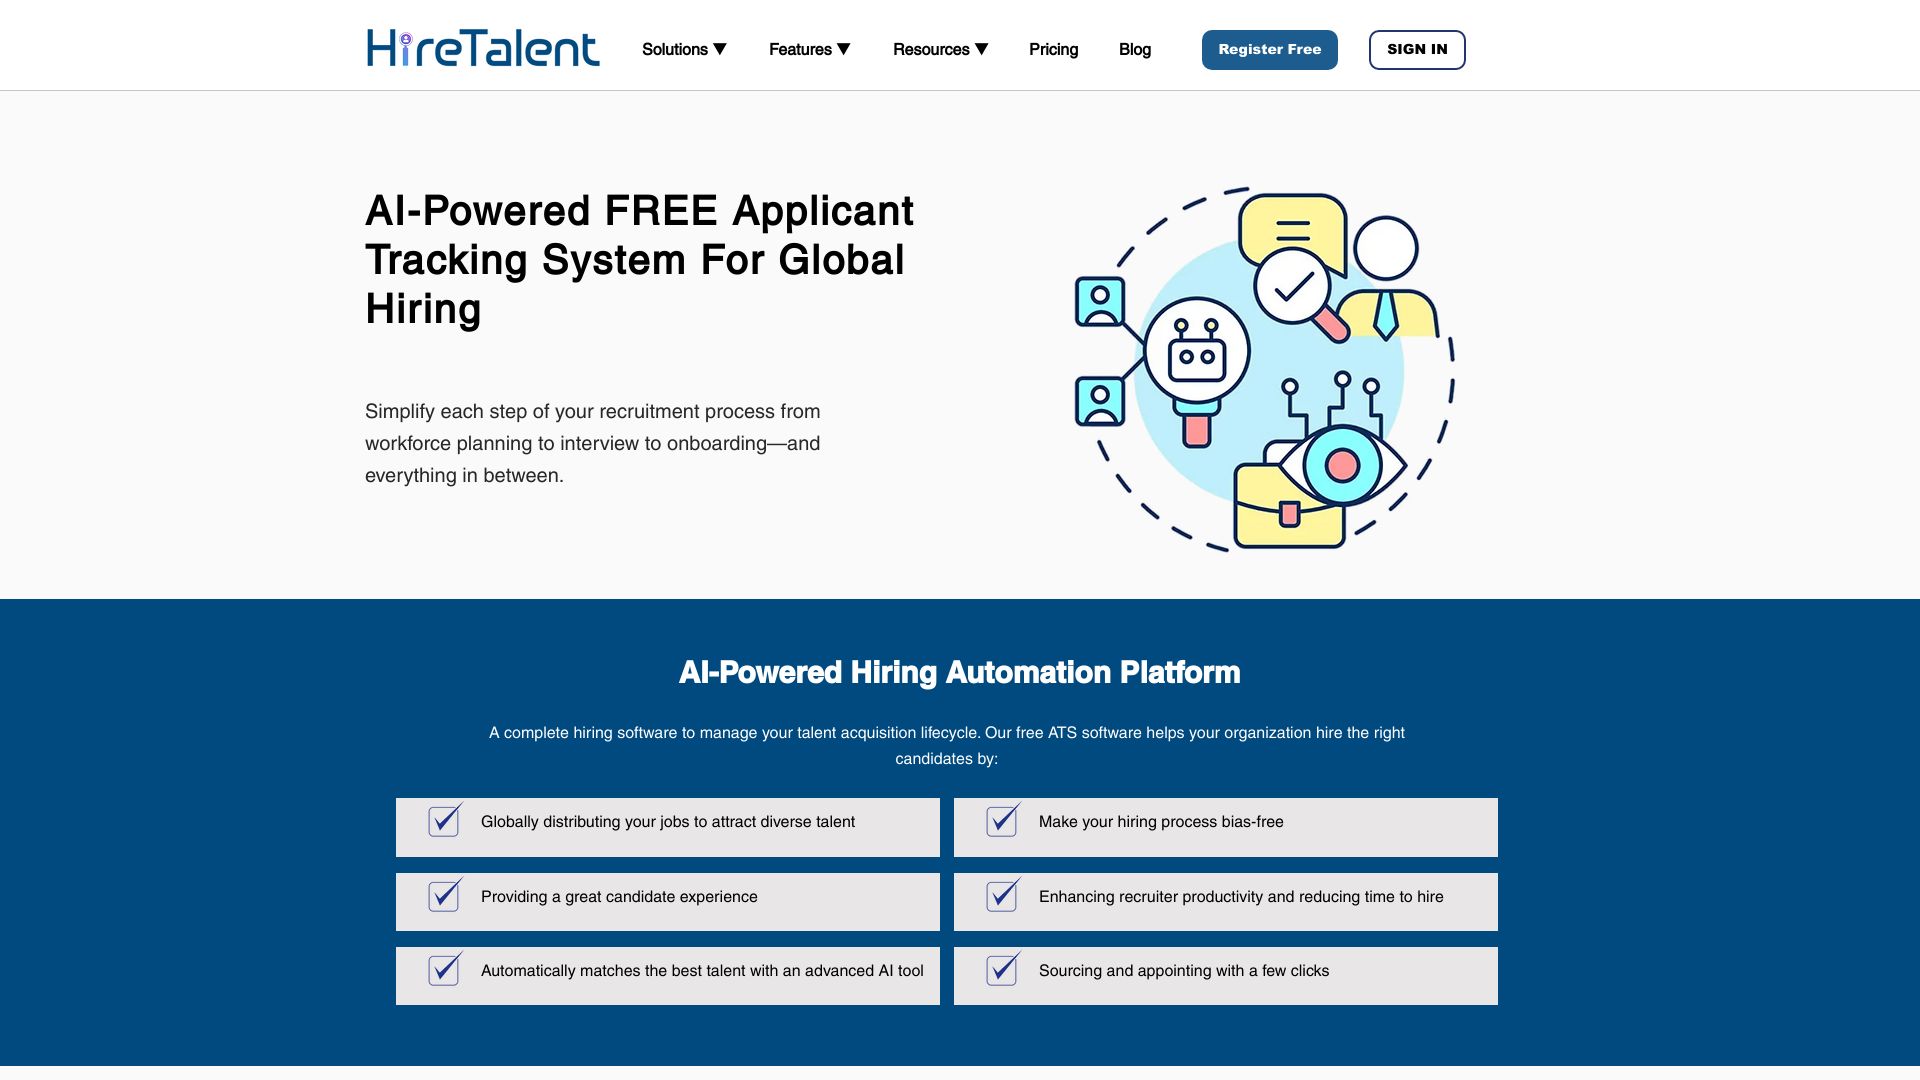 HireTalent-Free Applicant TrackingSystem